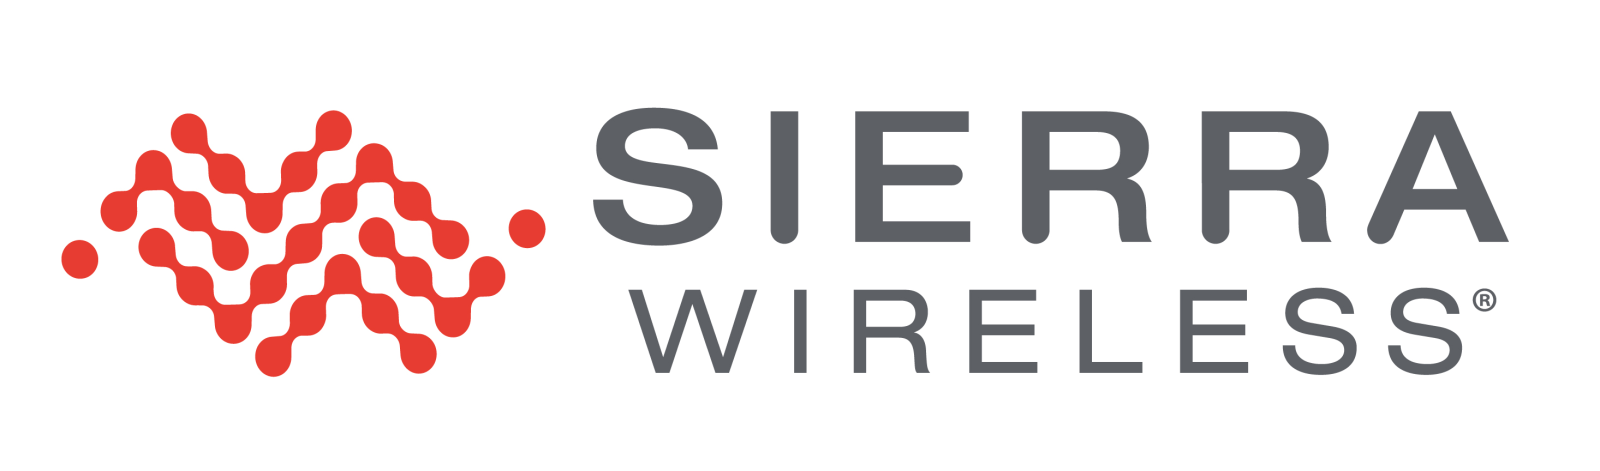 Sierra Wireless 1YR Renewal Airlink Premium